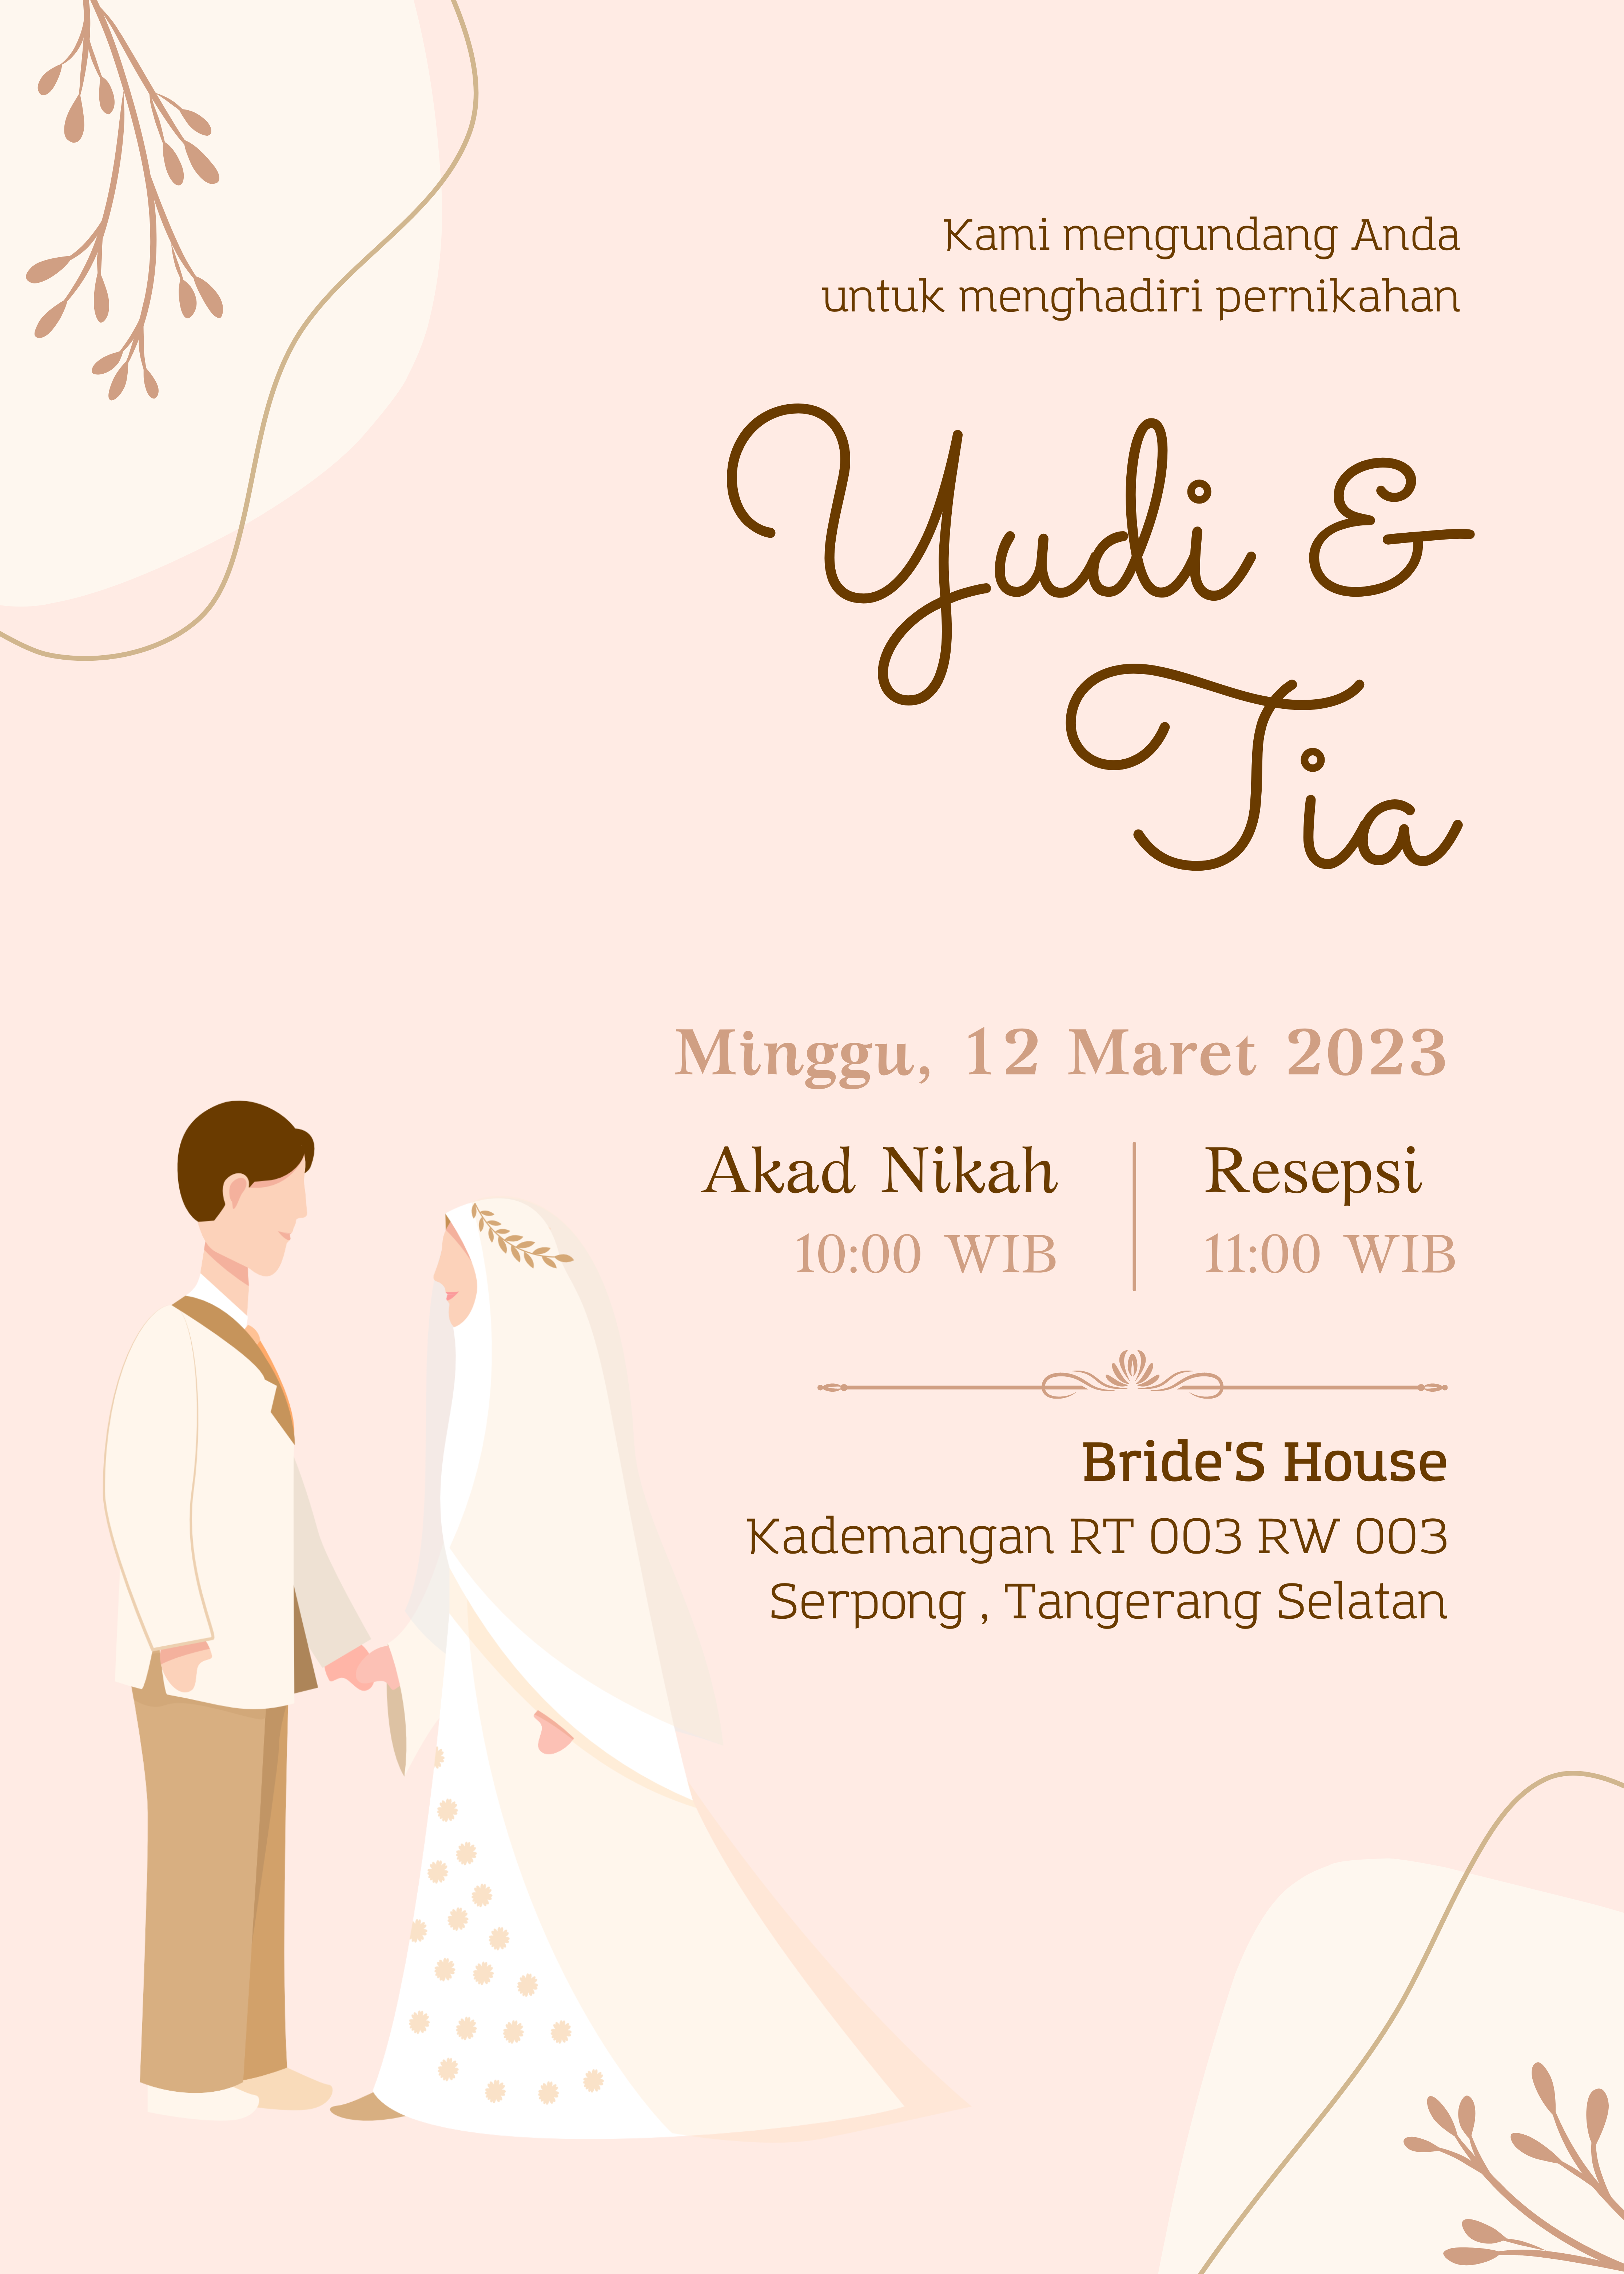 The Wedding Website of Tia Marliah and Yudi Awaludin